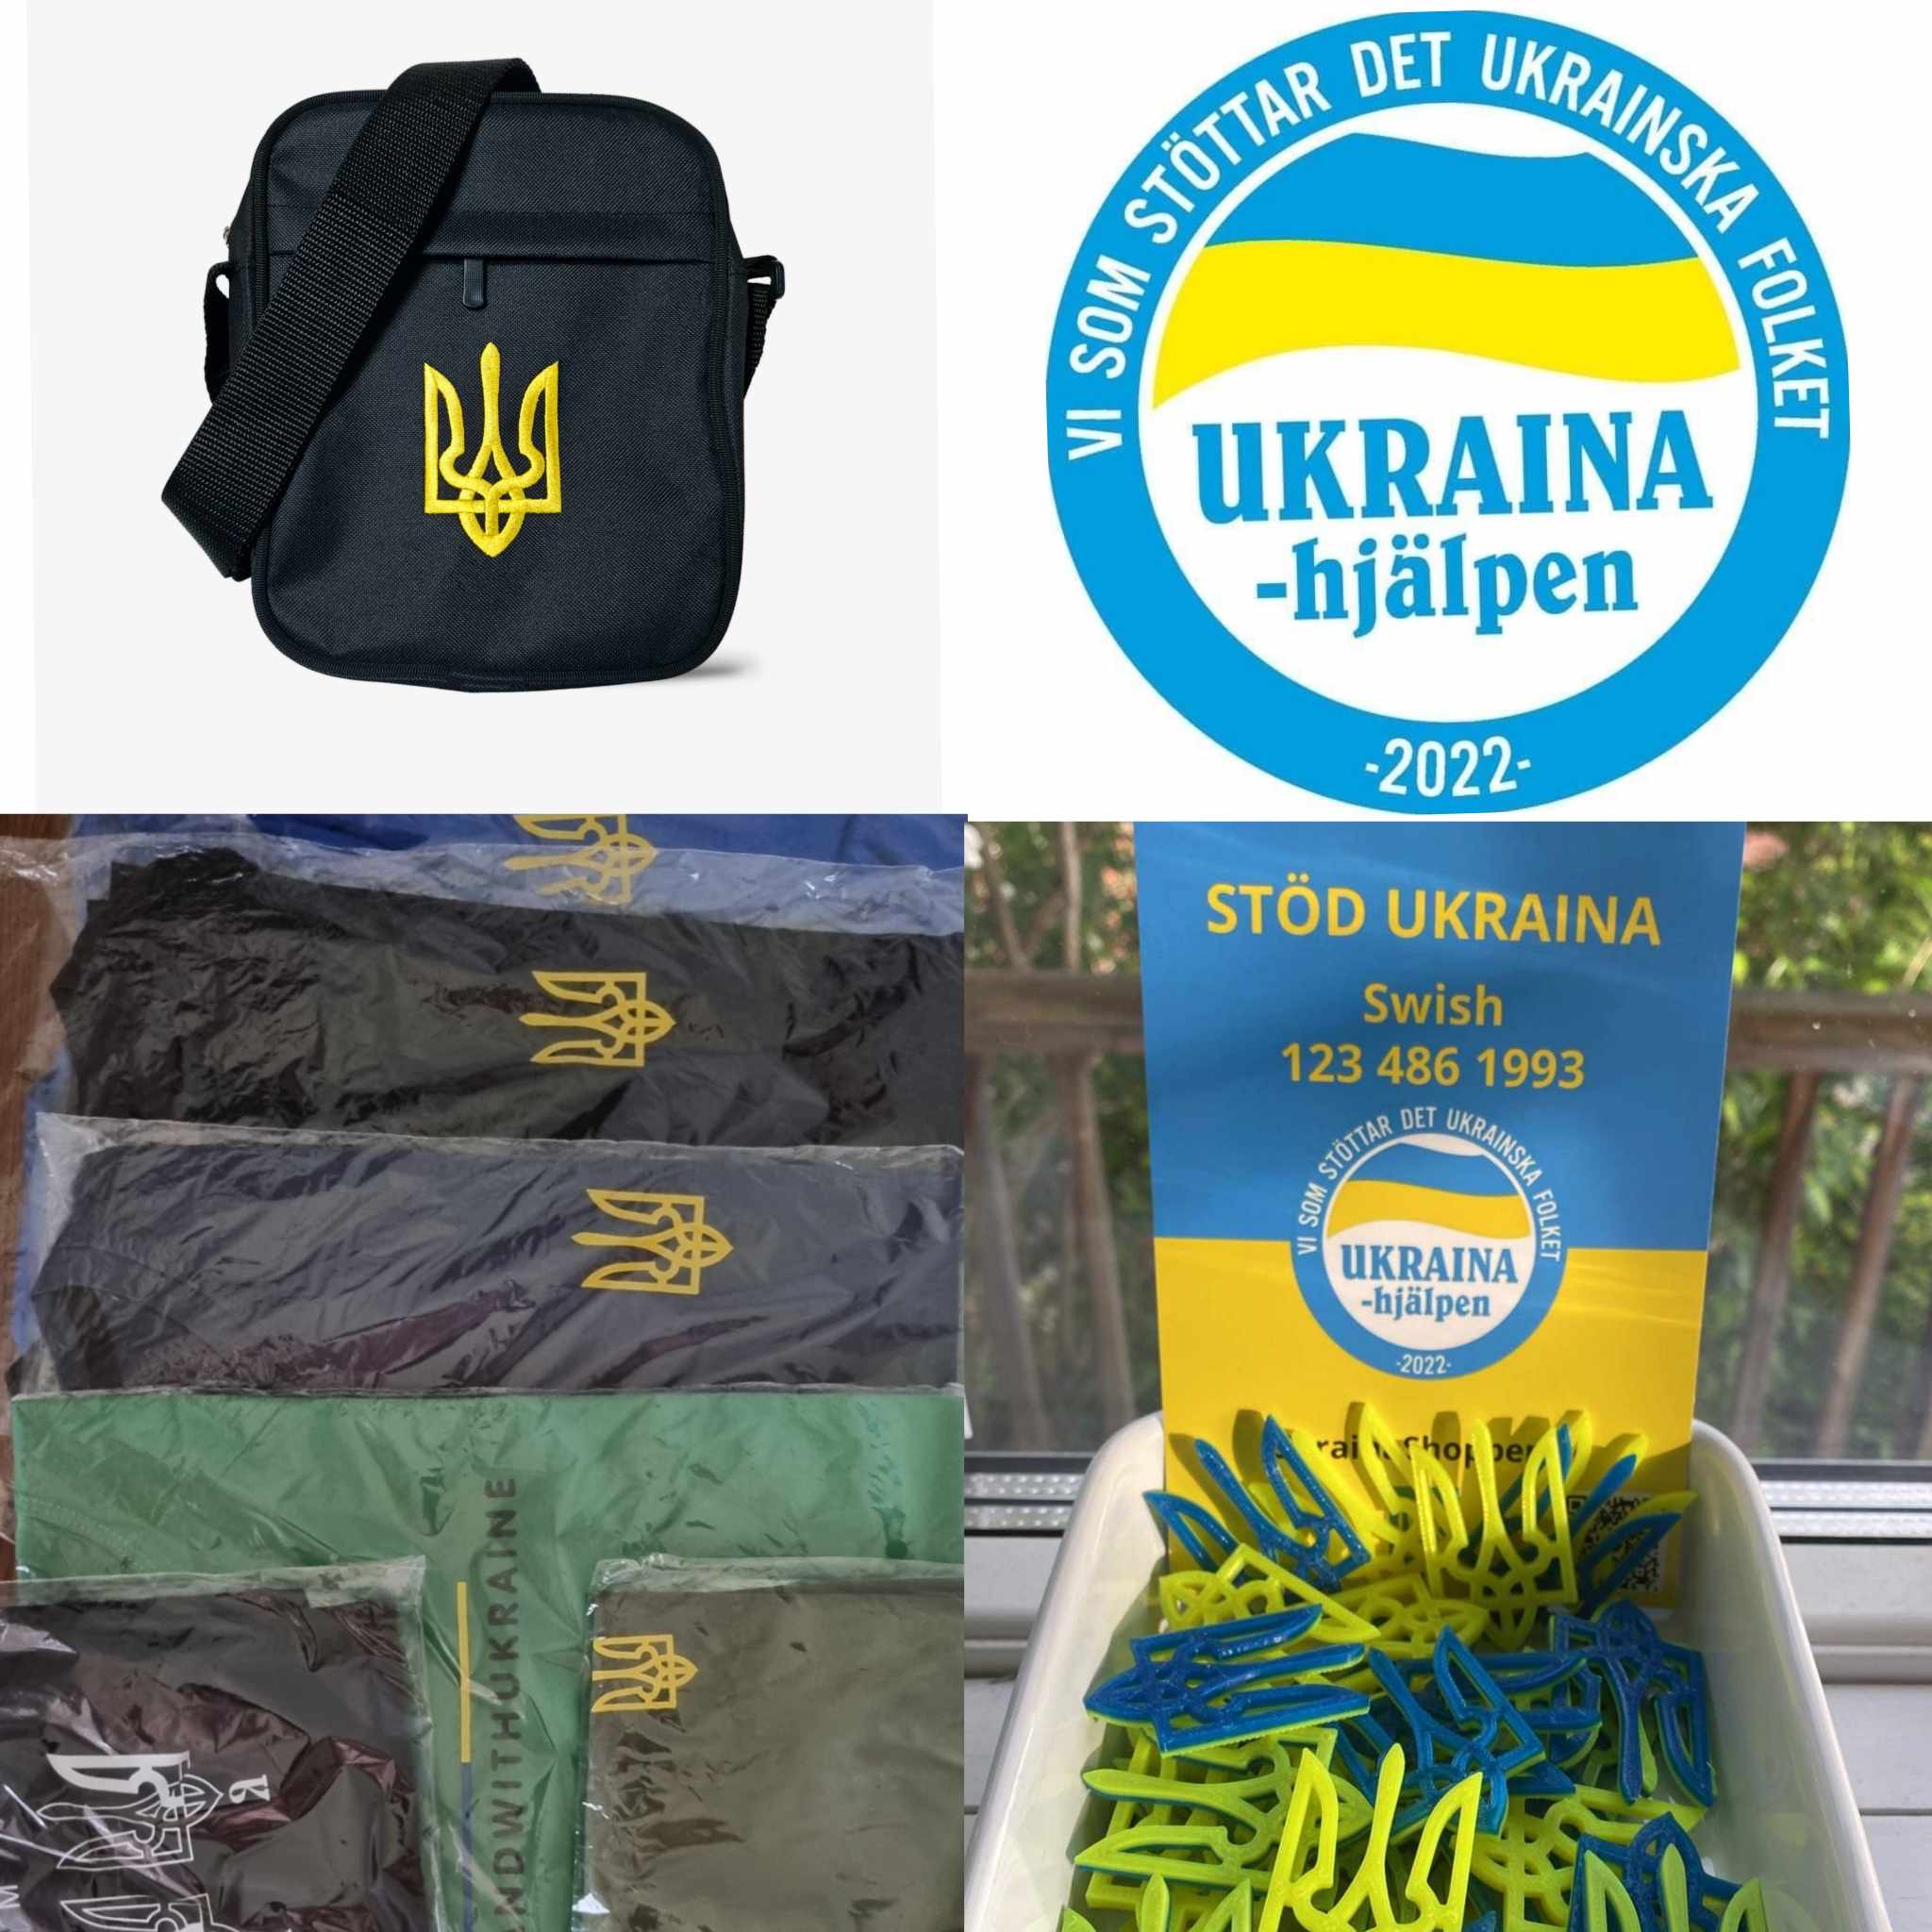 Dina fina Ukrainska bonusar